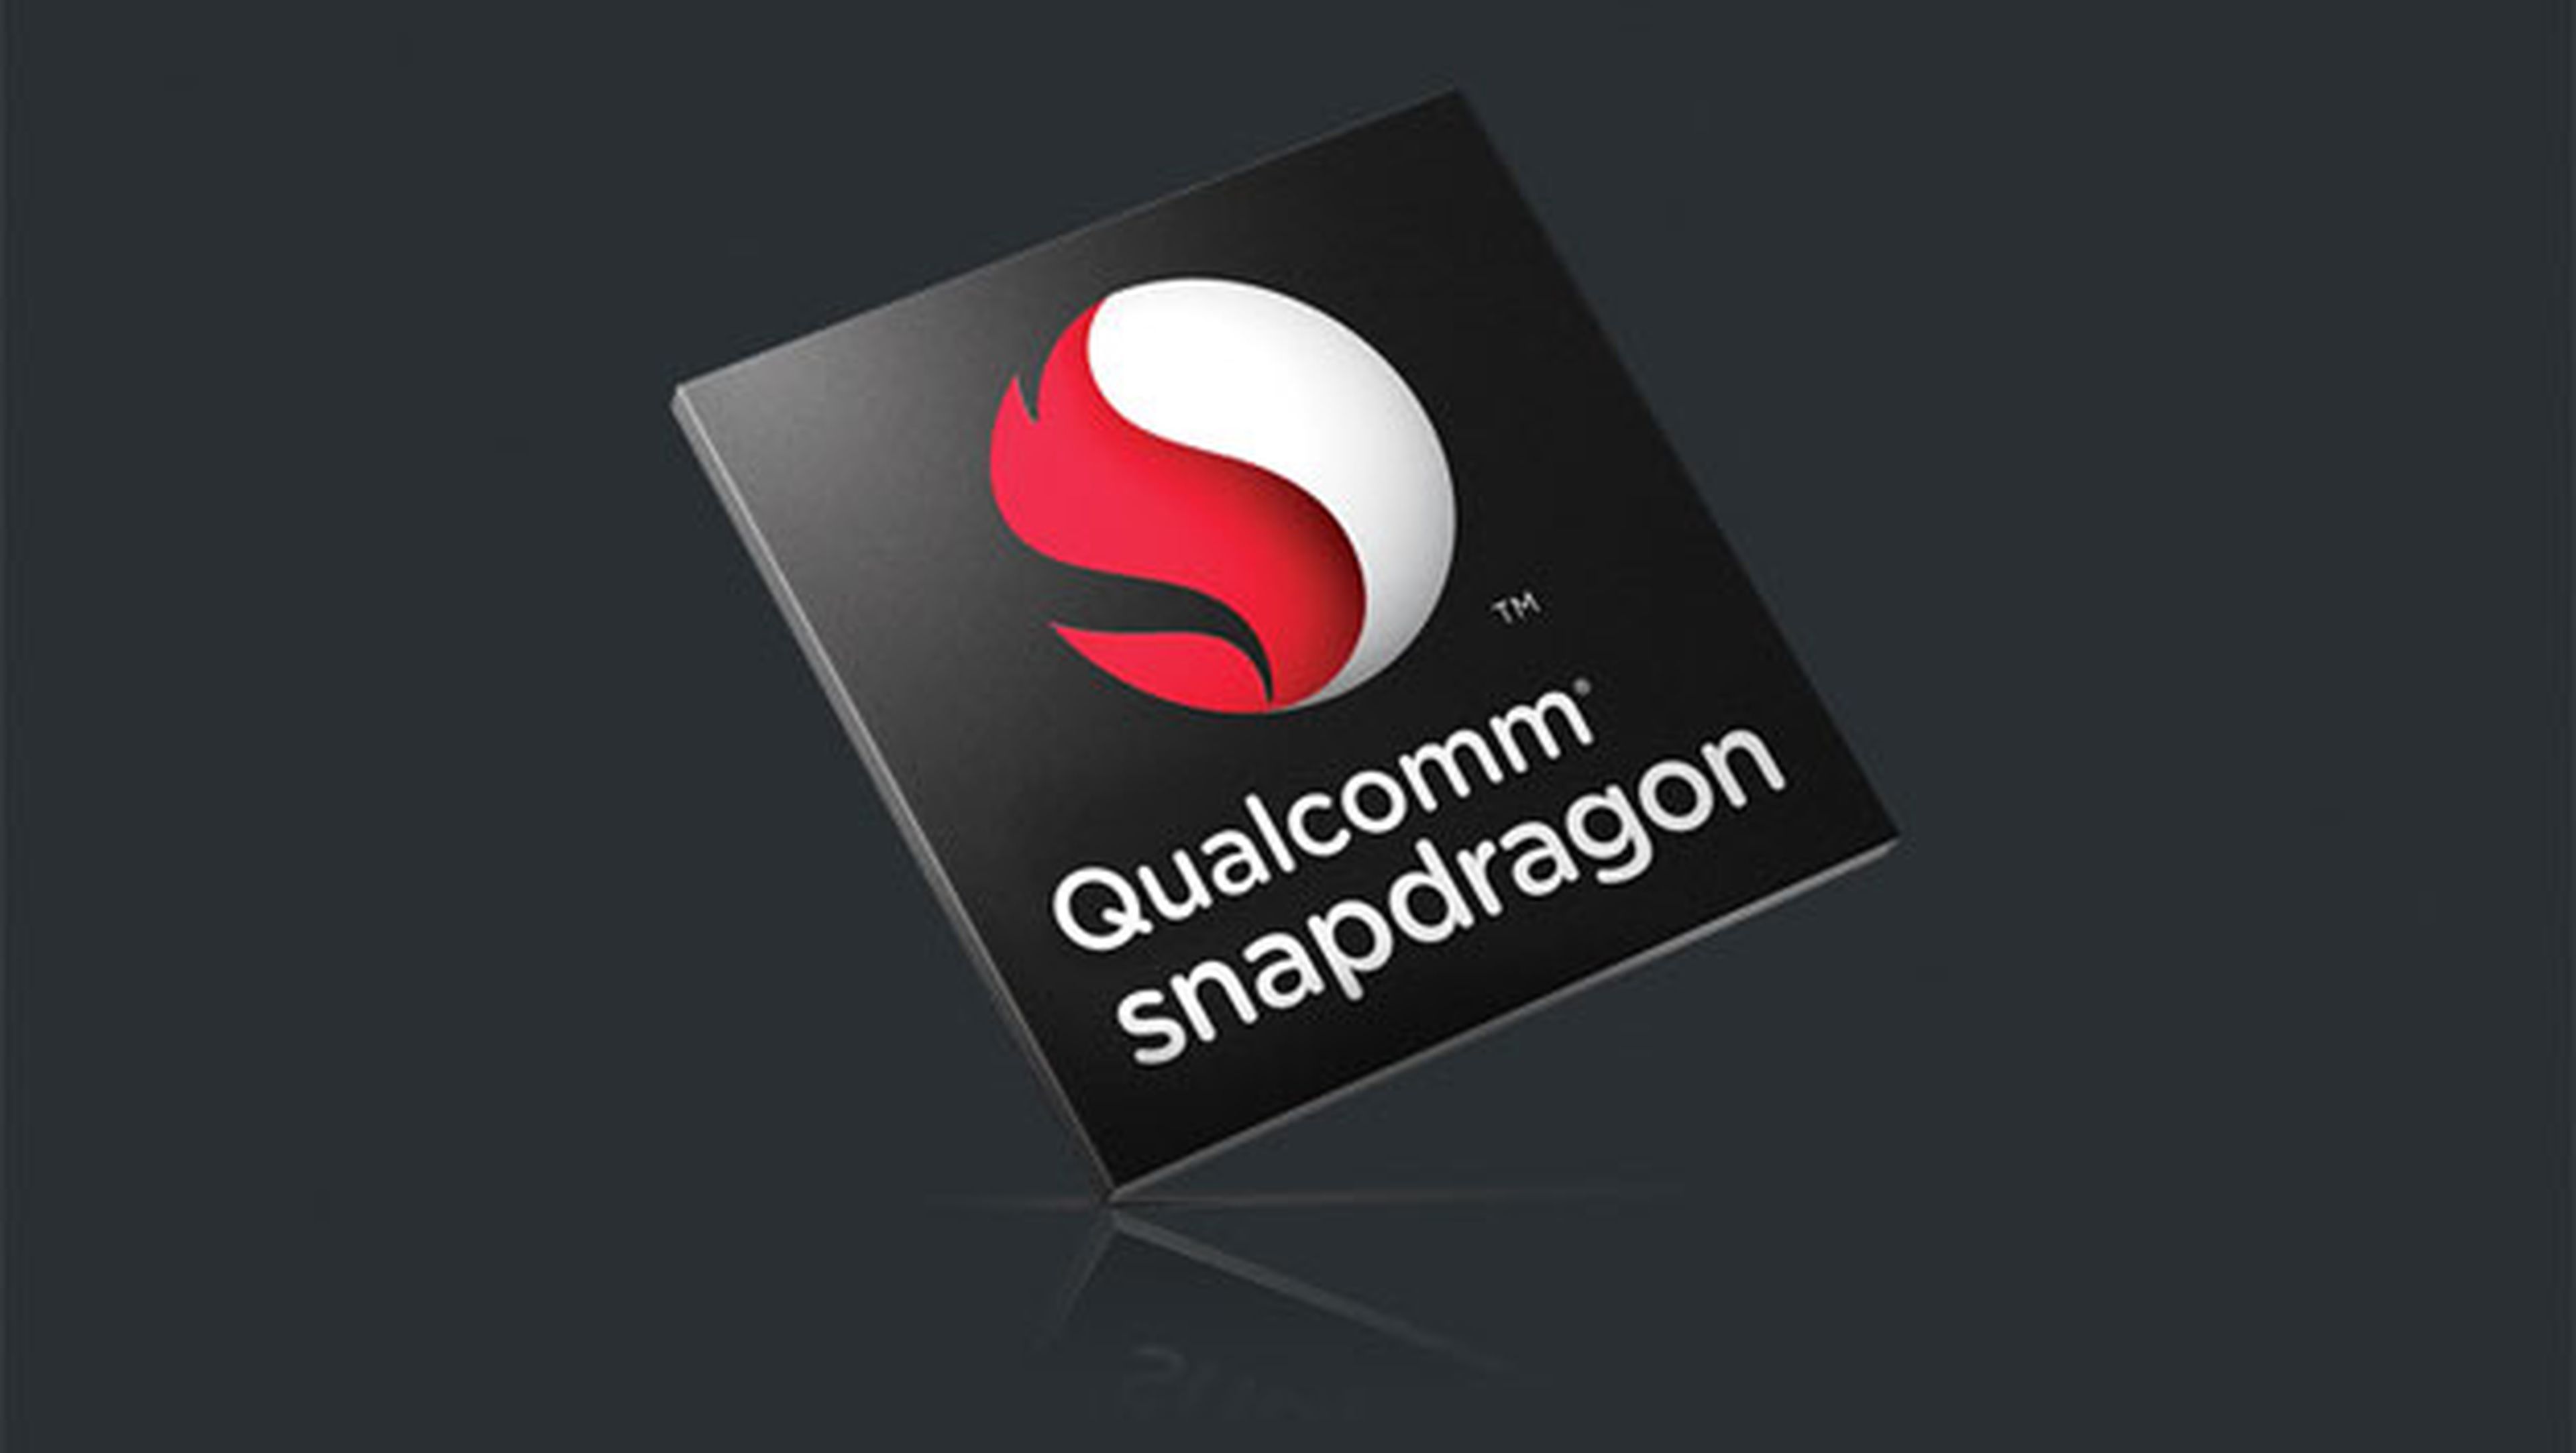 Qualcomm snapdragon